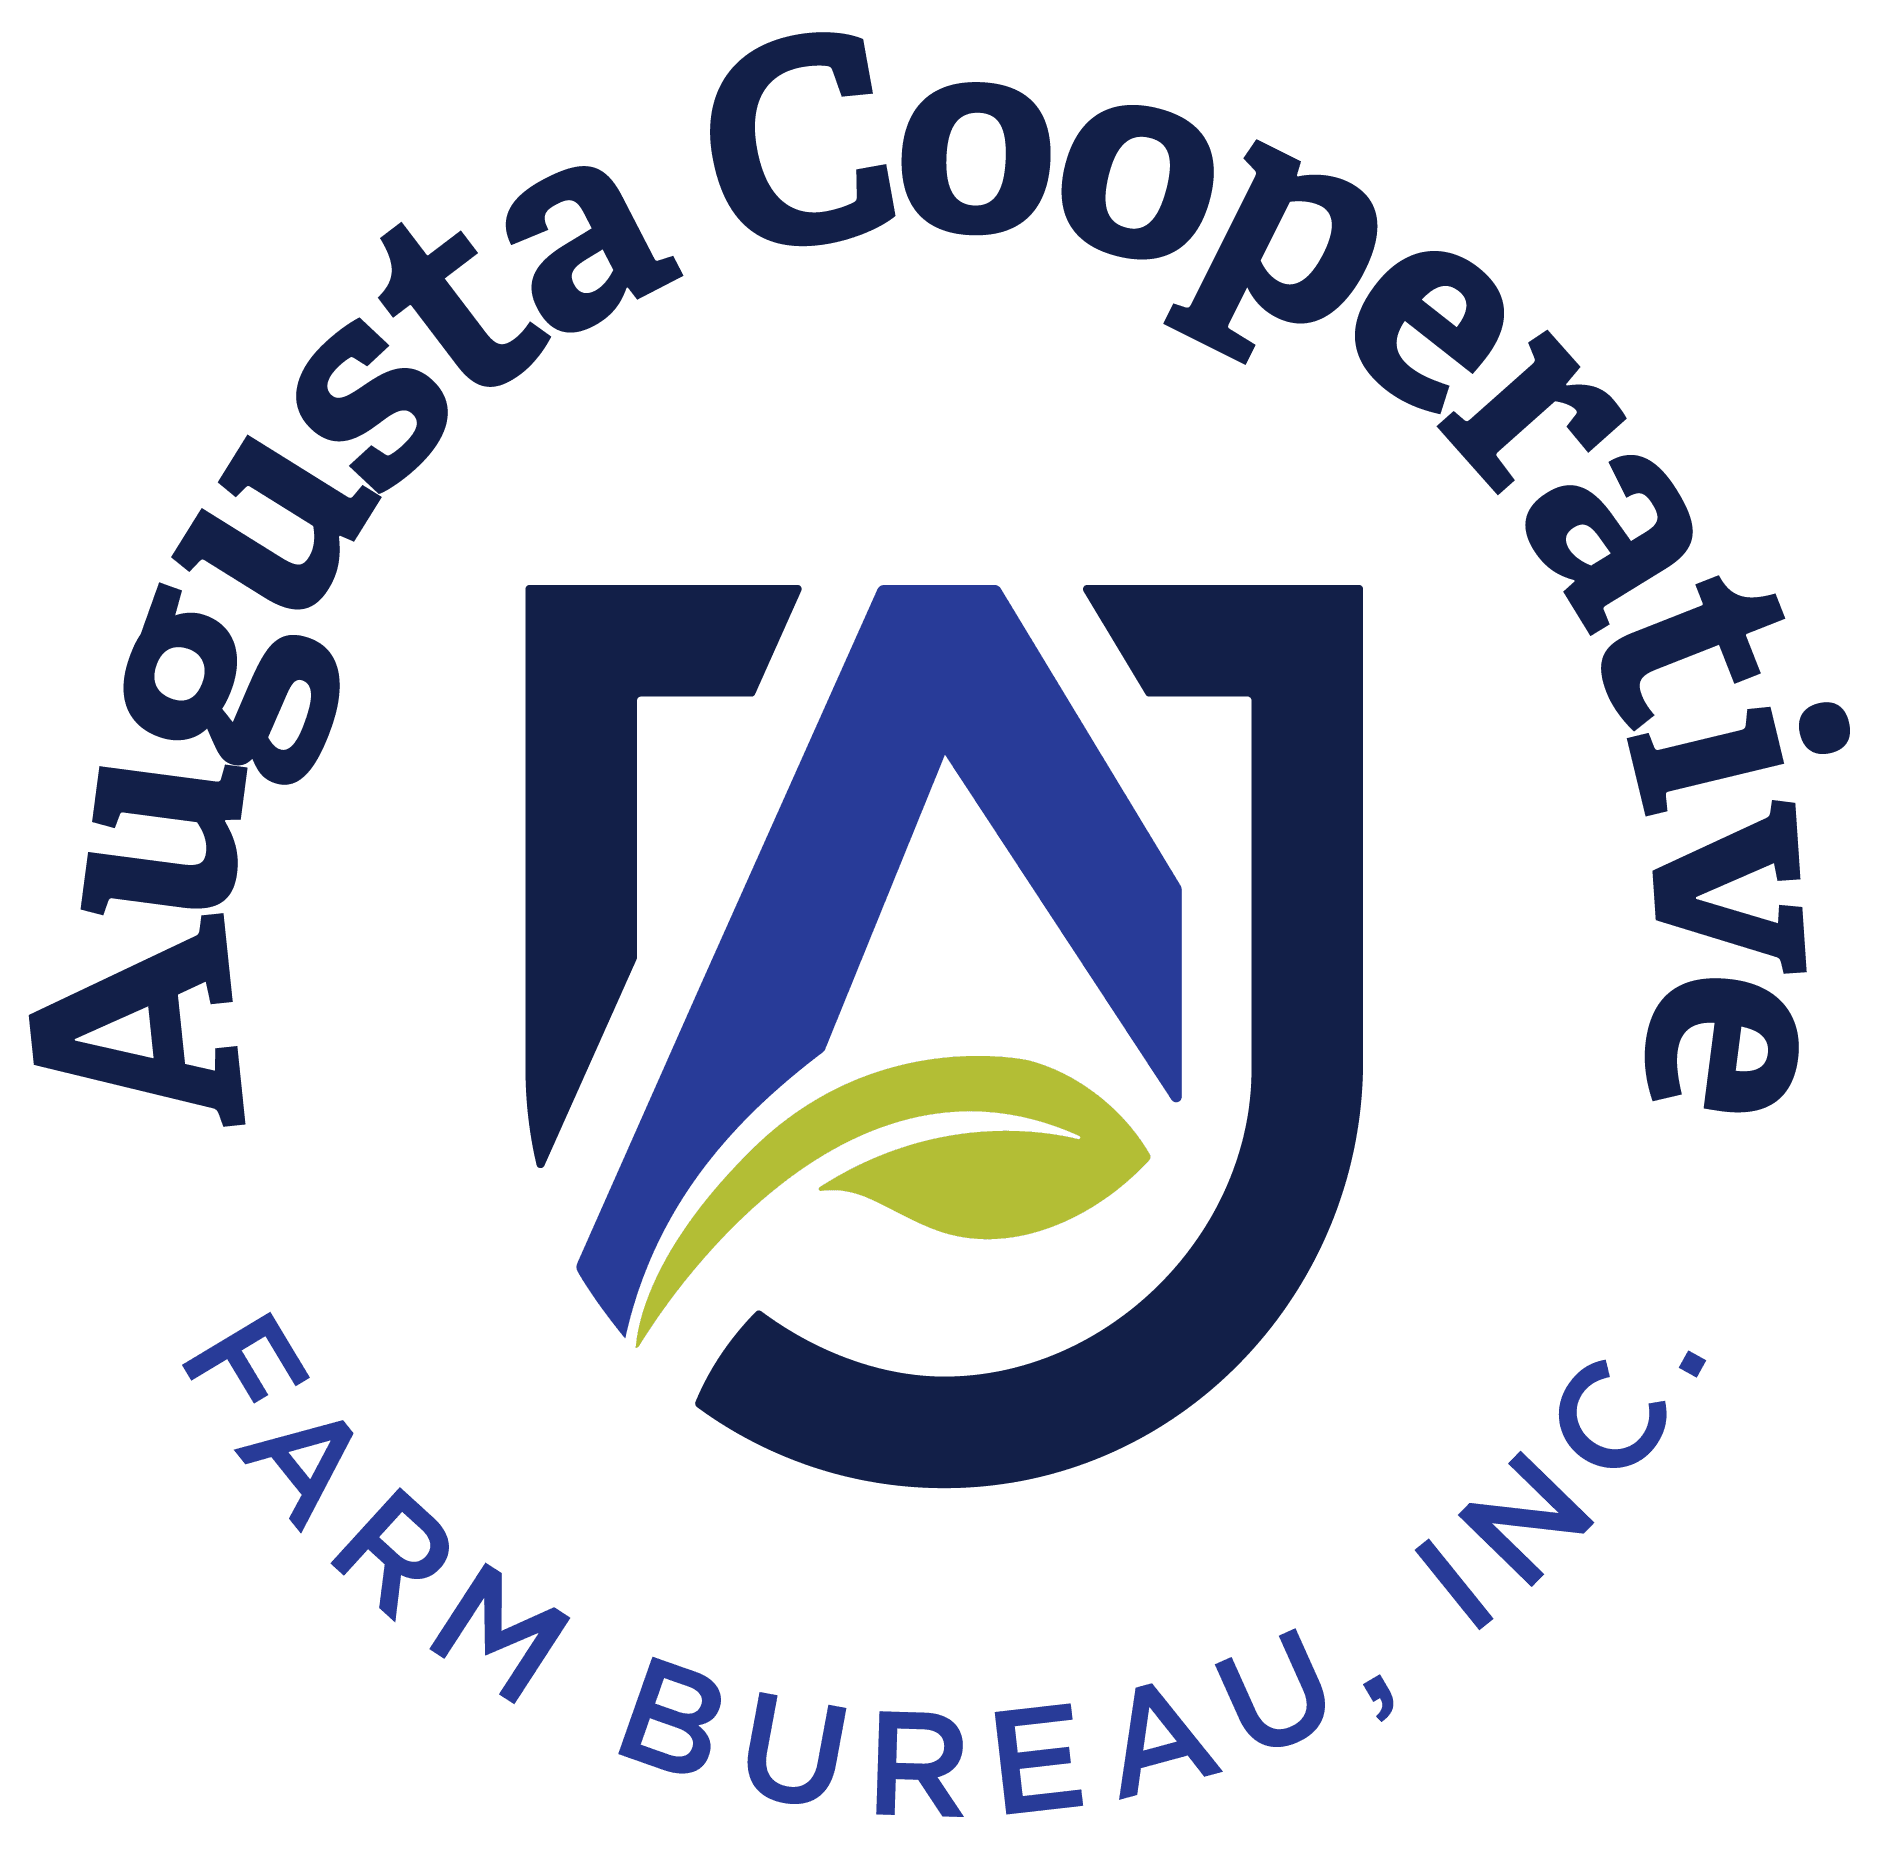 Lodge, Cast Iron Skillet, 9 - Augusta Cooperative Farm Bureau, Inc.